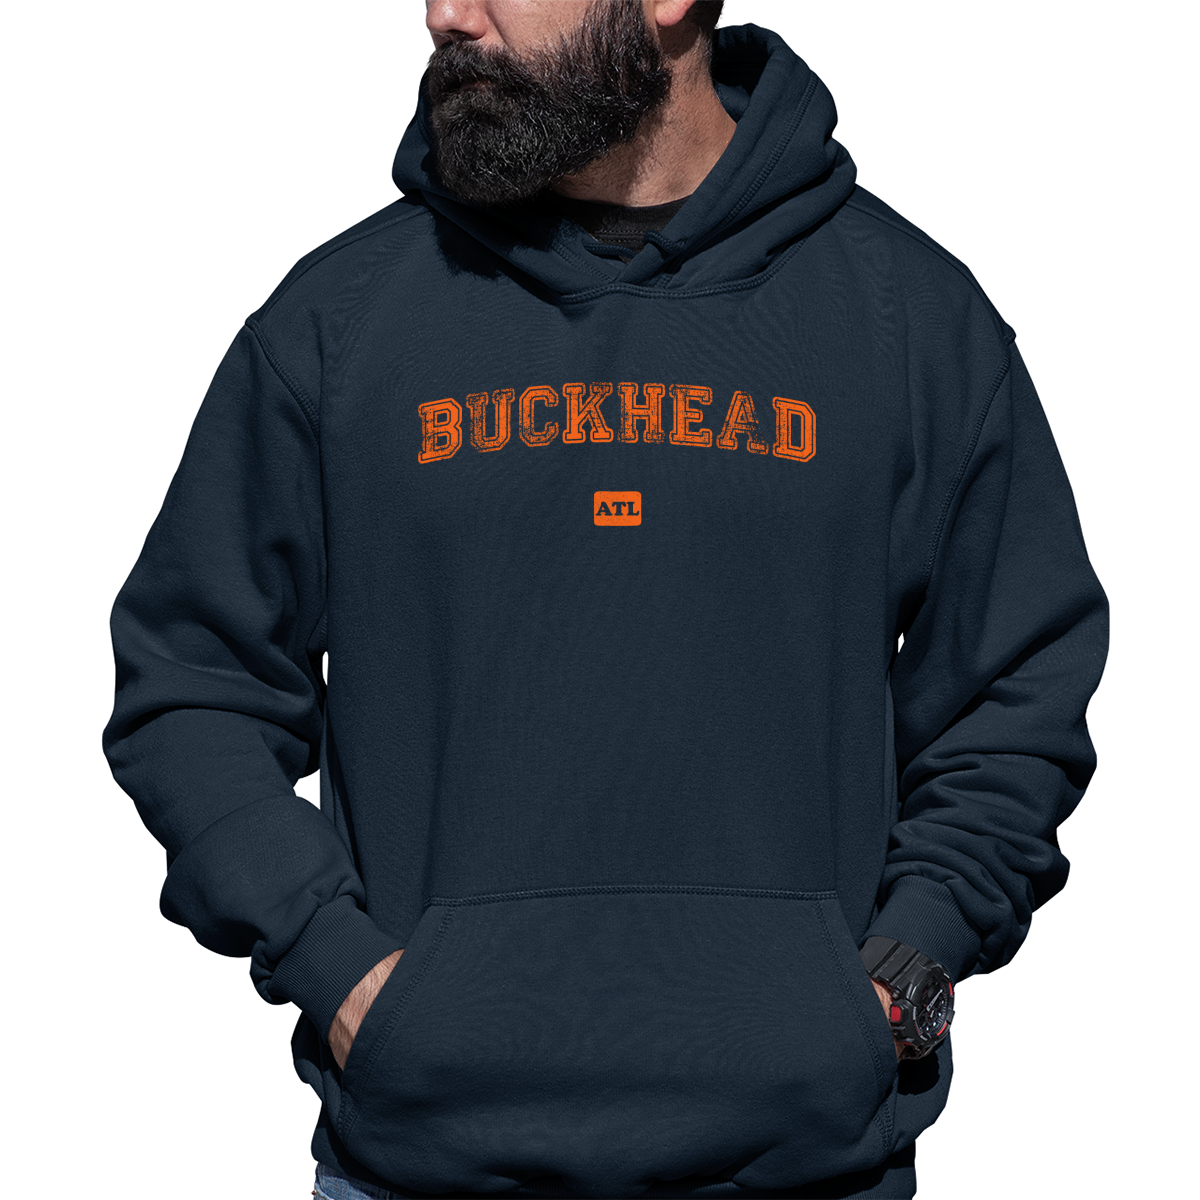 Buckhead ATL Represent Unisex Hoodie | Navy